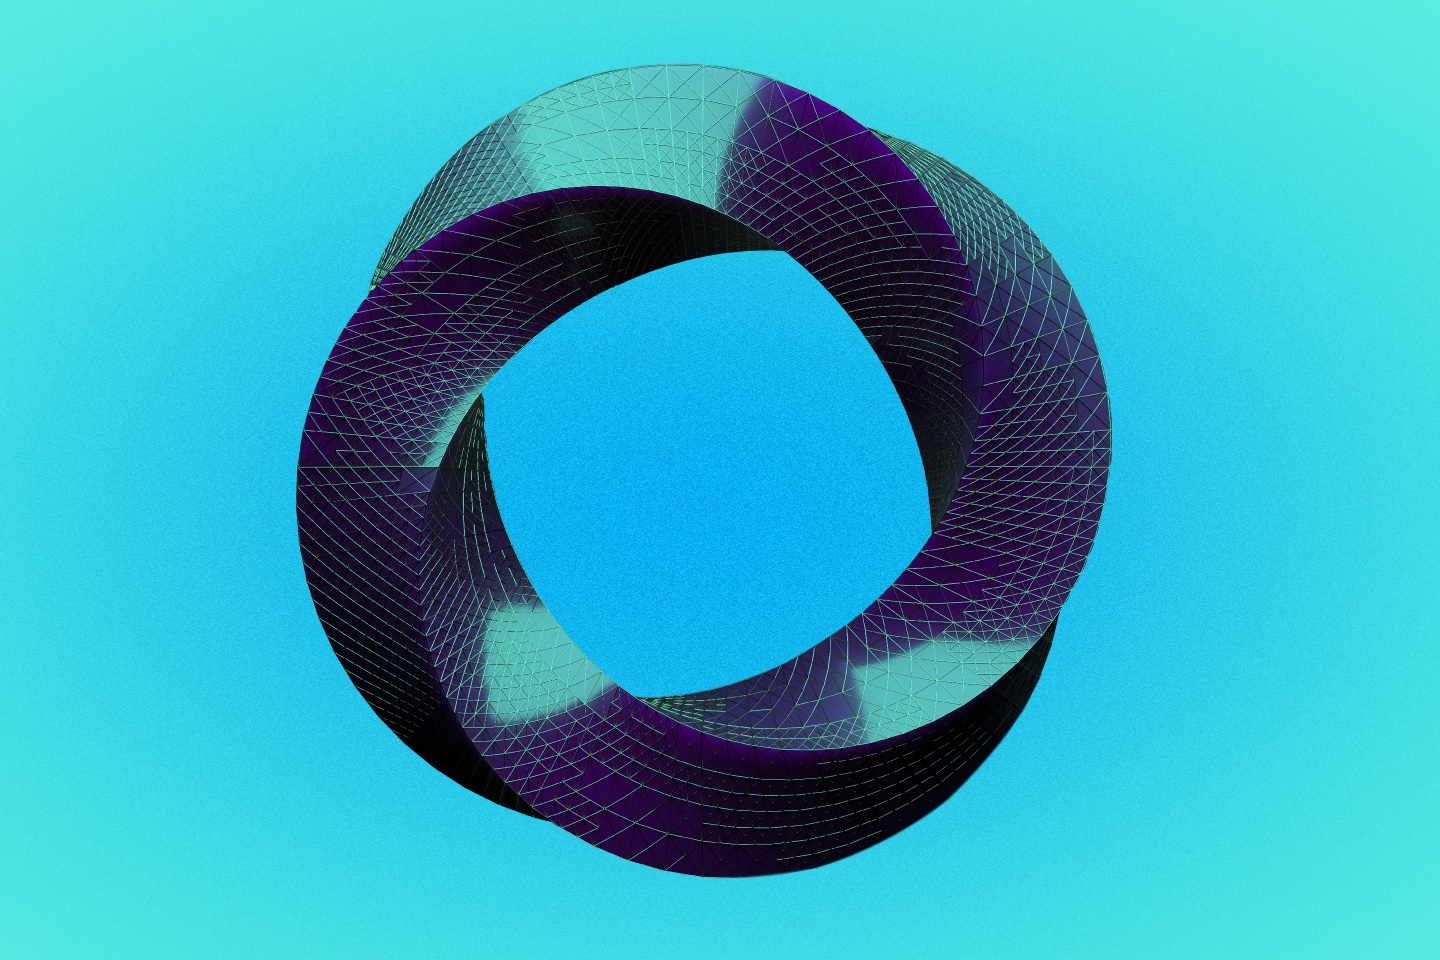 Digital generated image of purple looped twisted shape against purple background.